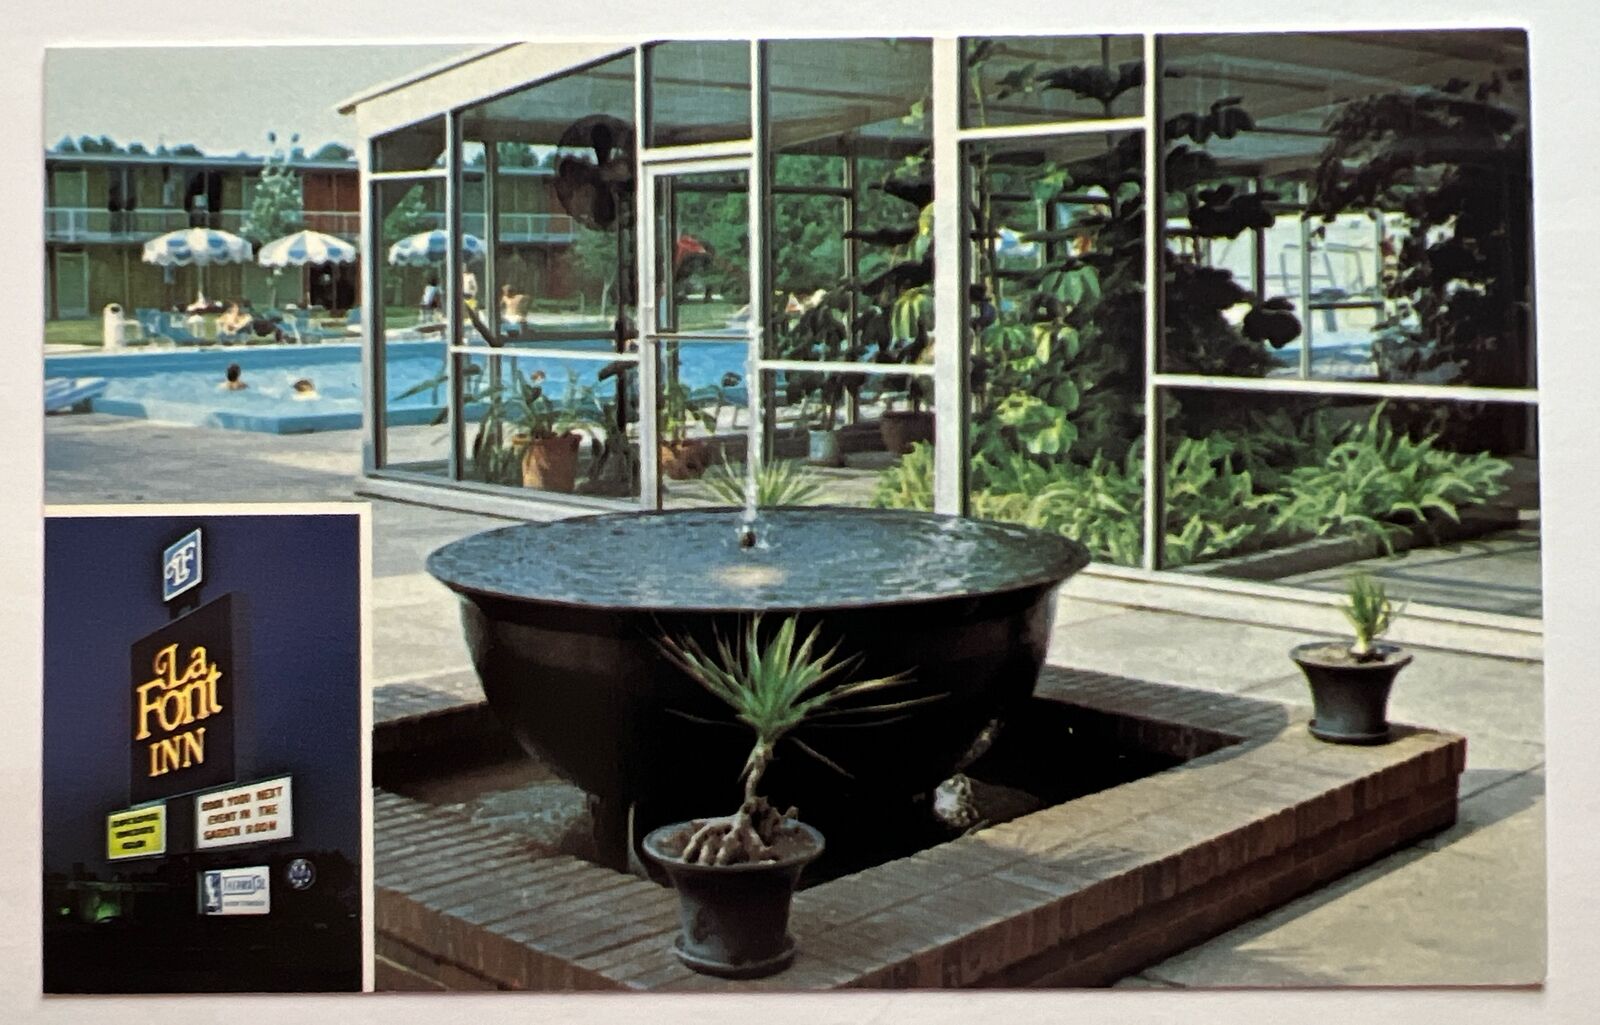 Vintage La Font Inn Pascagoula MS Postcard Courtyard Fountain Pool c)1970s